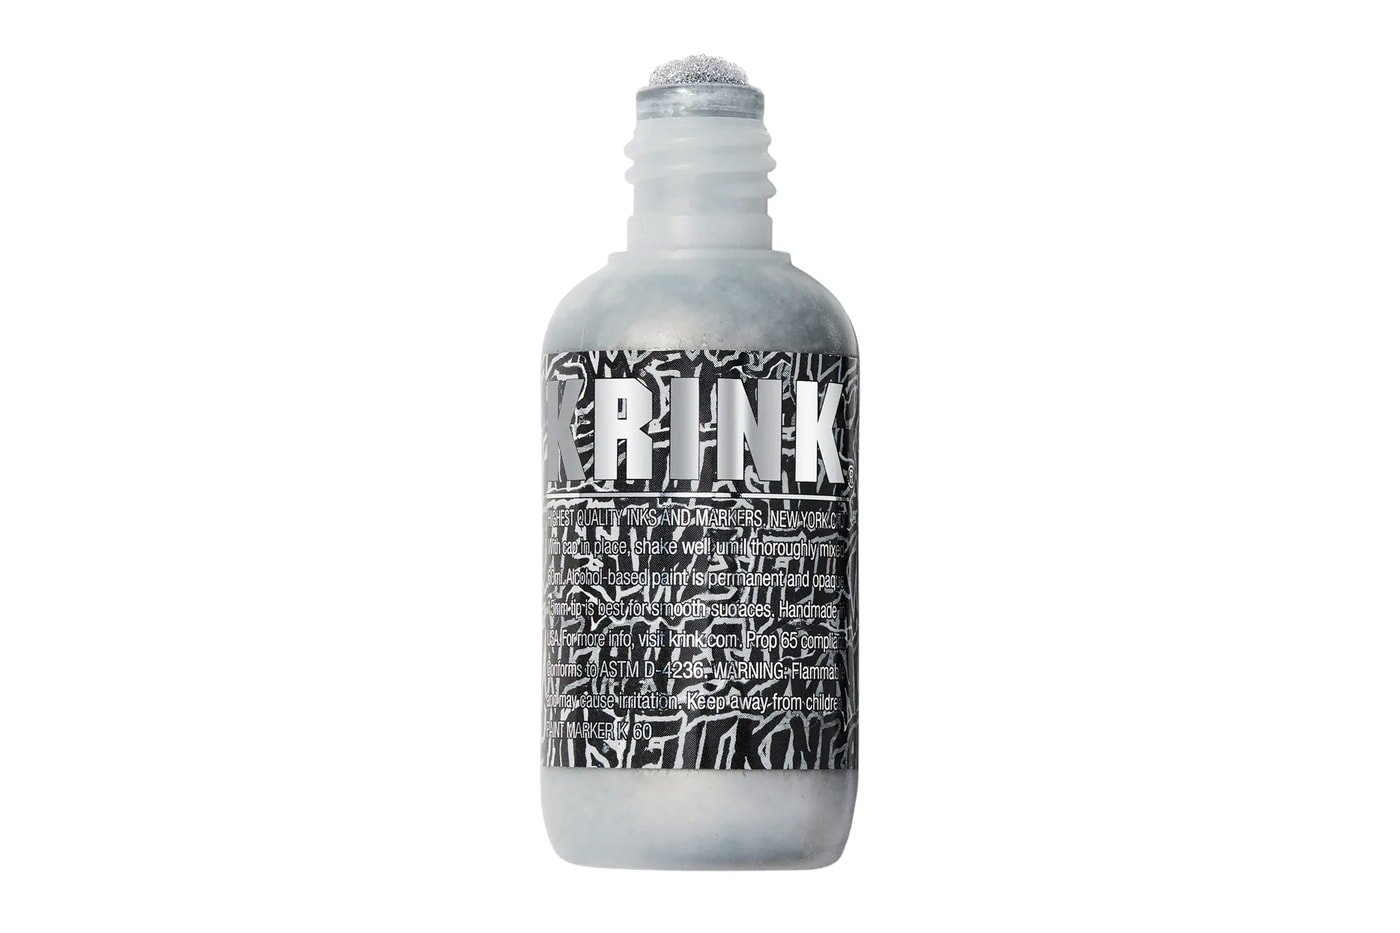 Krink Paint Marker 4 Set Silver